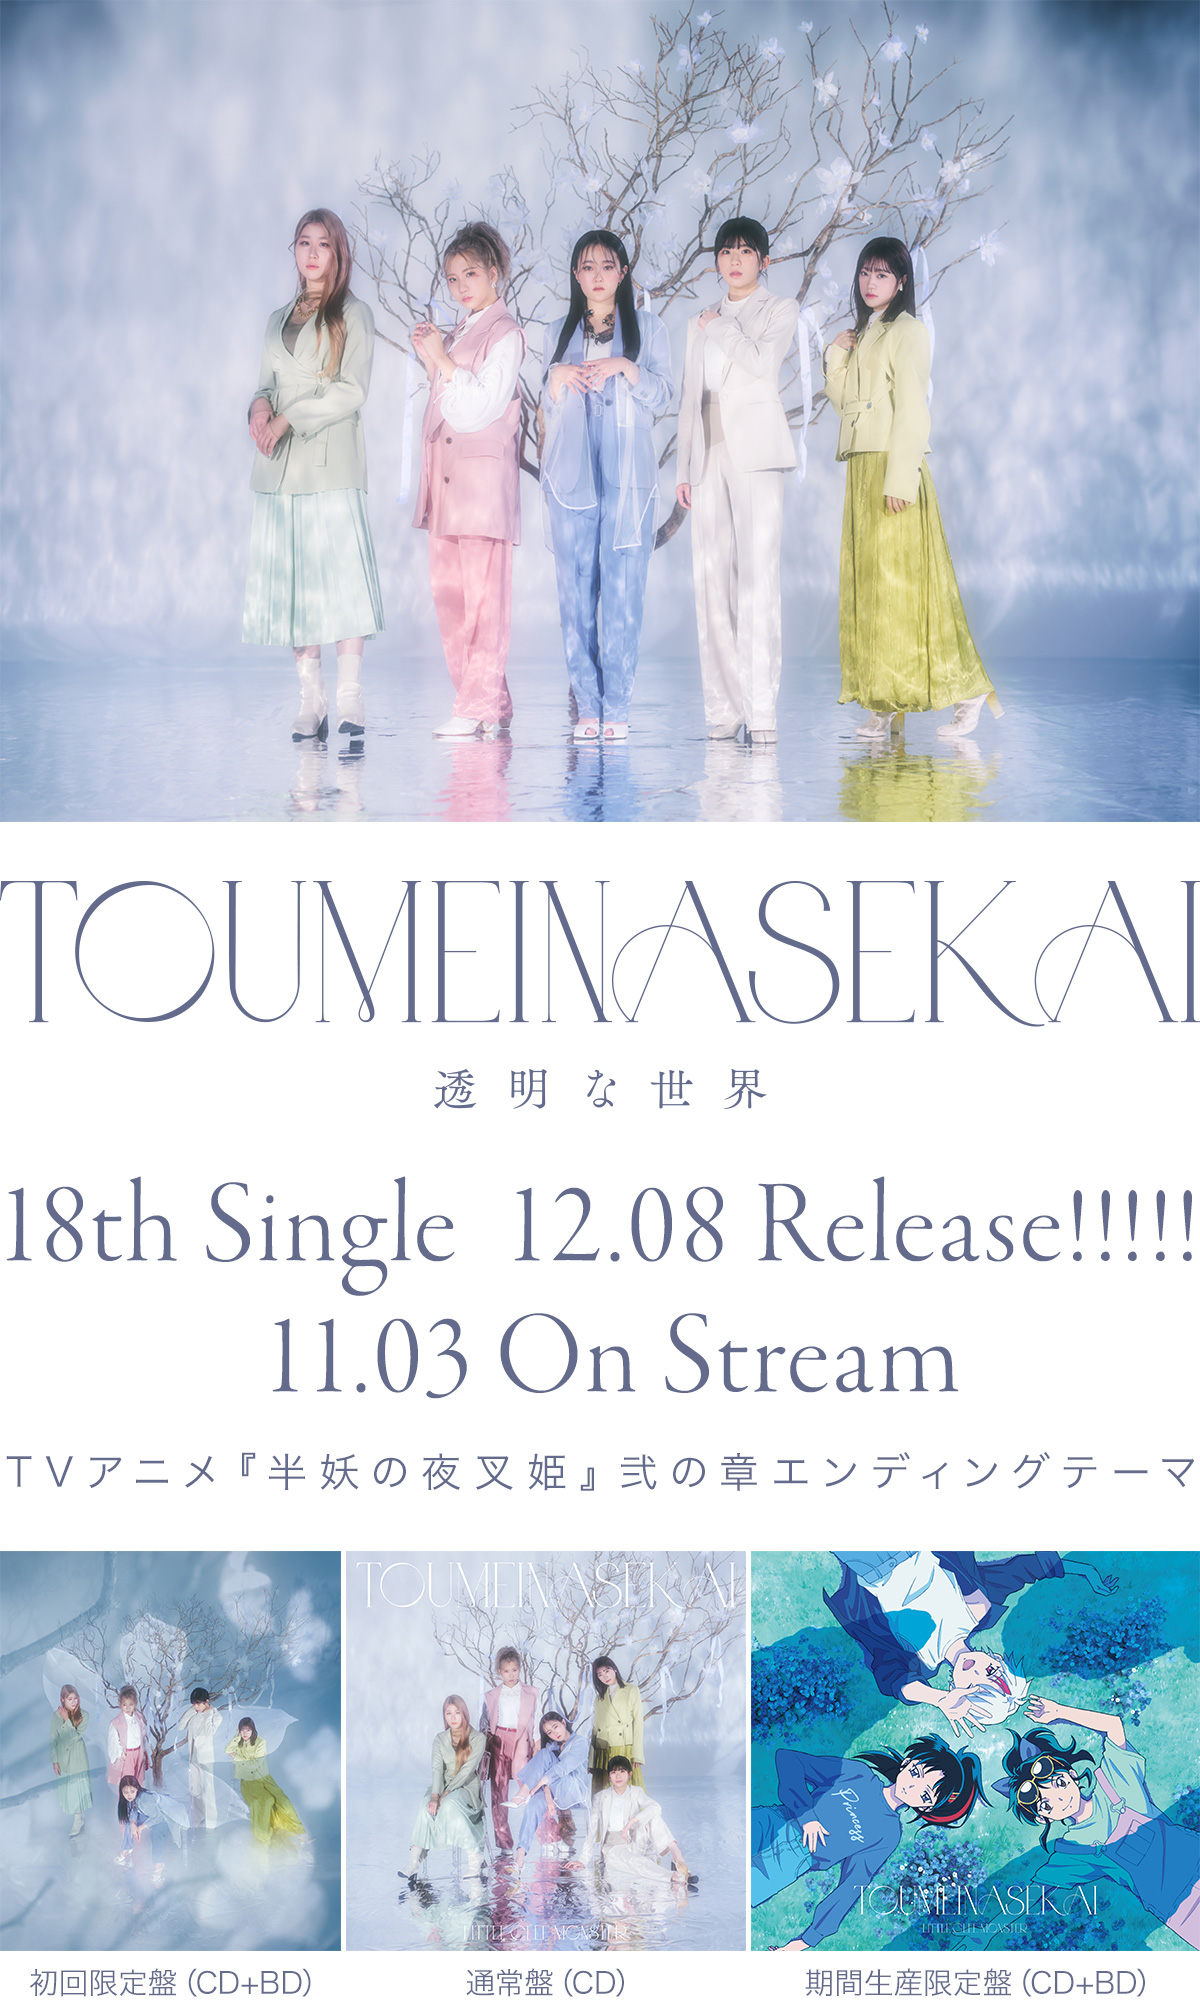 18th Single「透明な世界」2021.12.08 Release / 11.03 On Stream